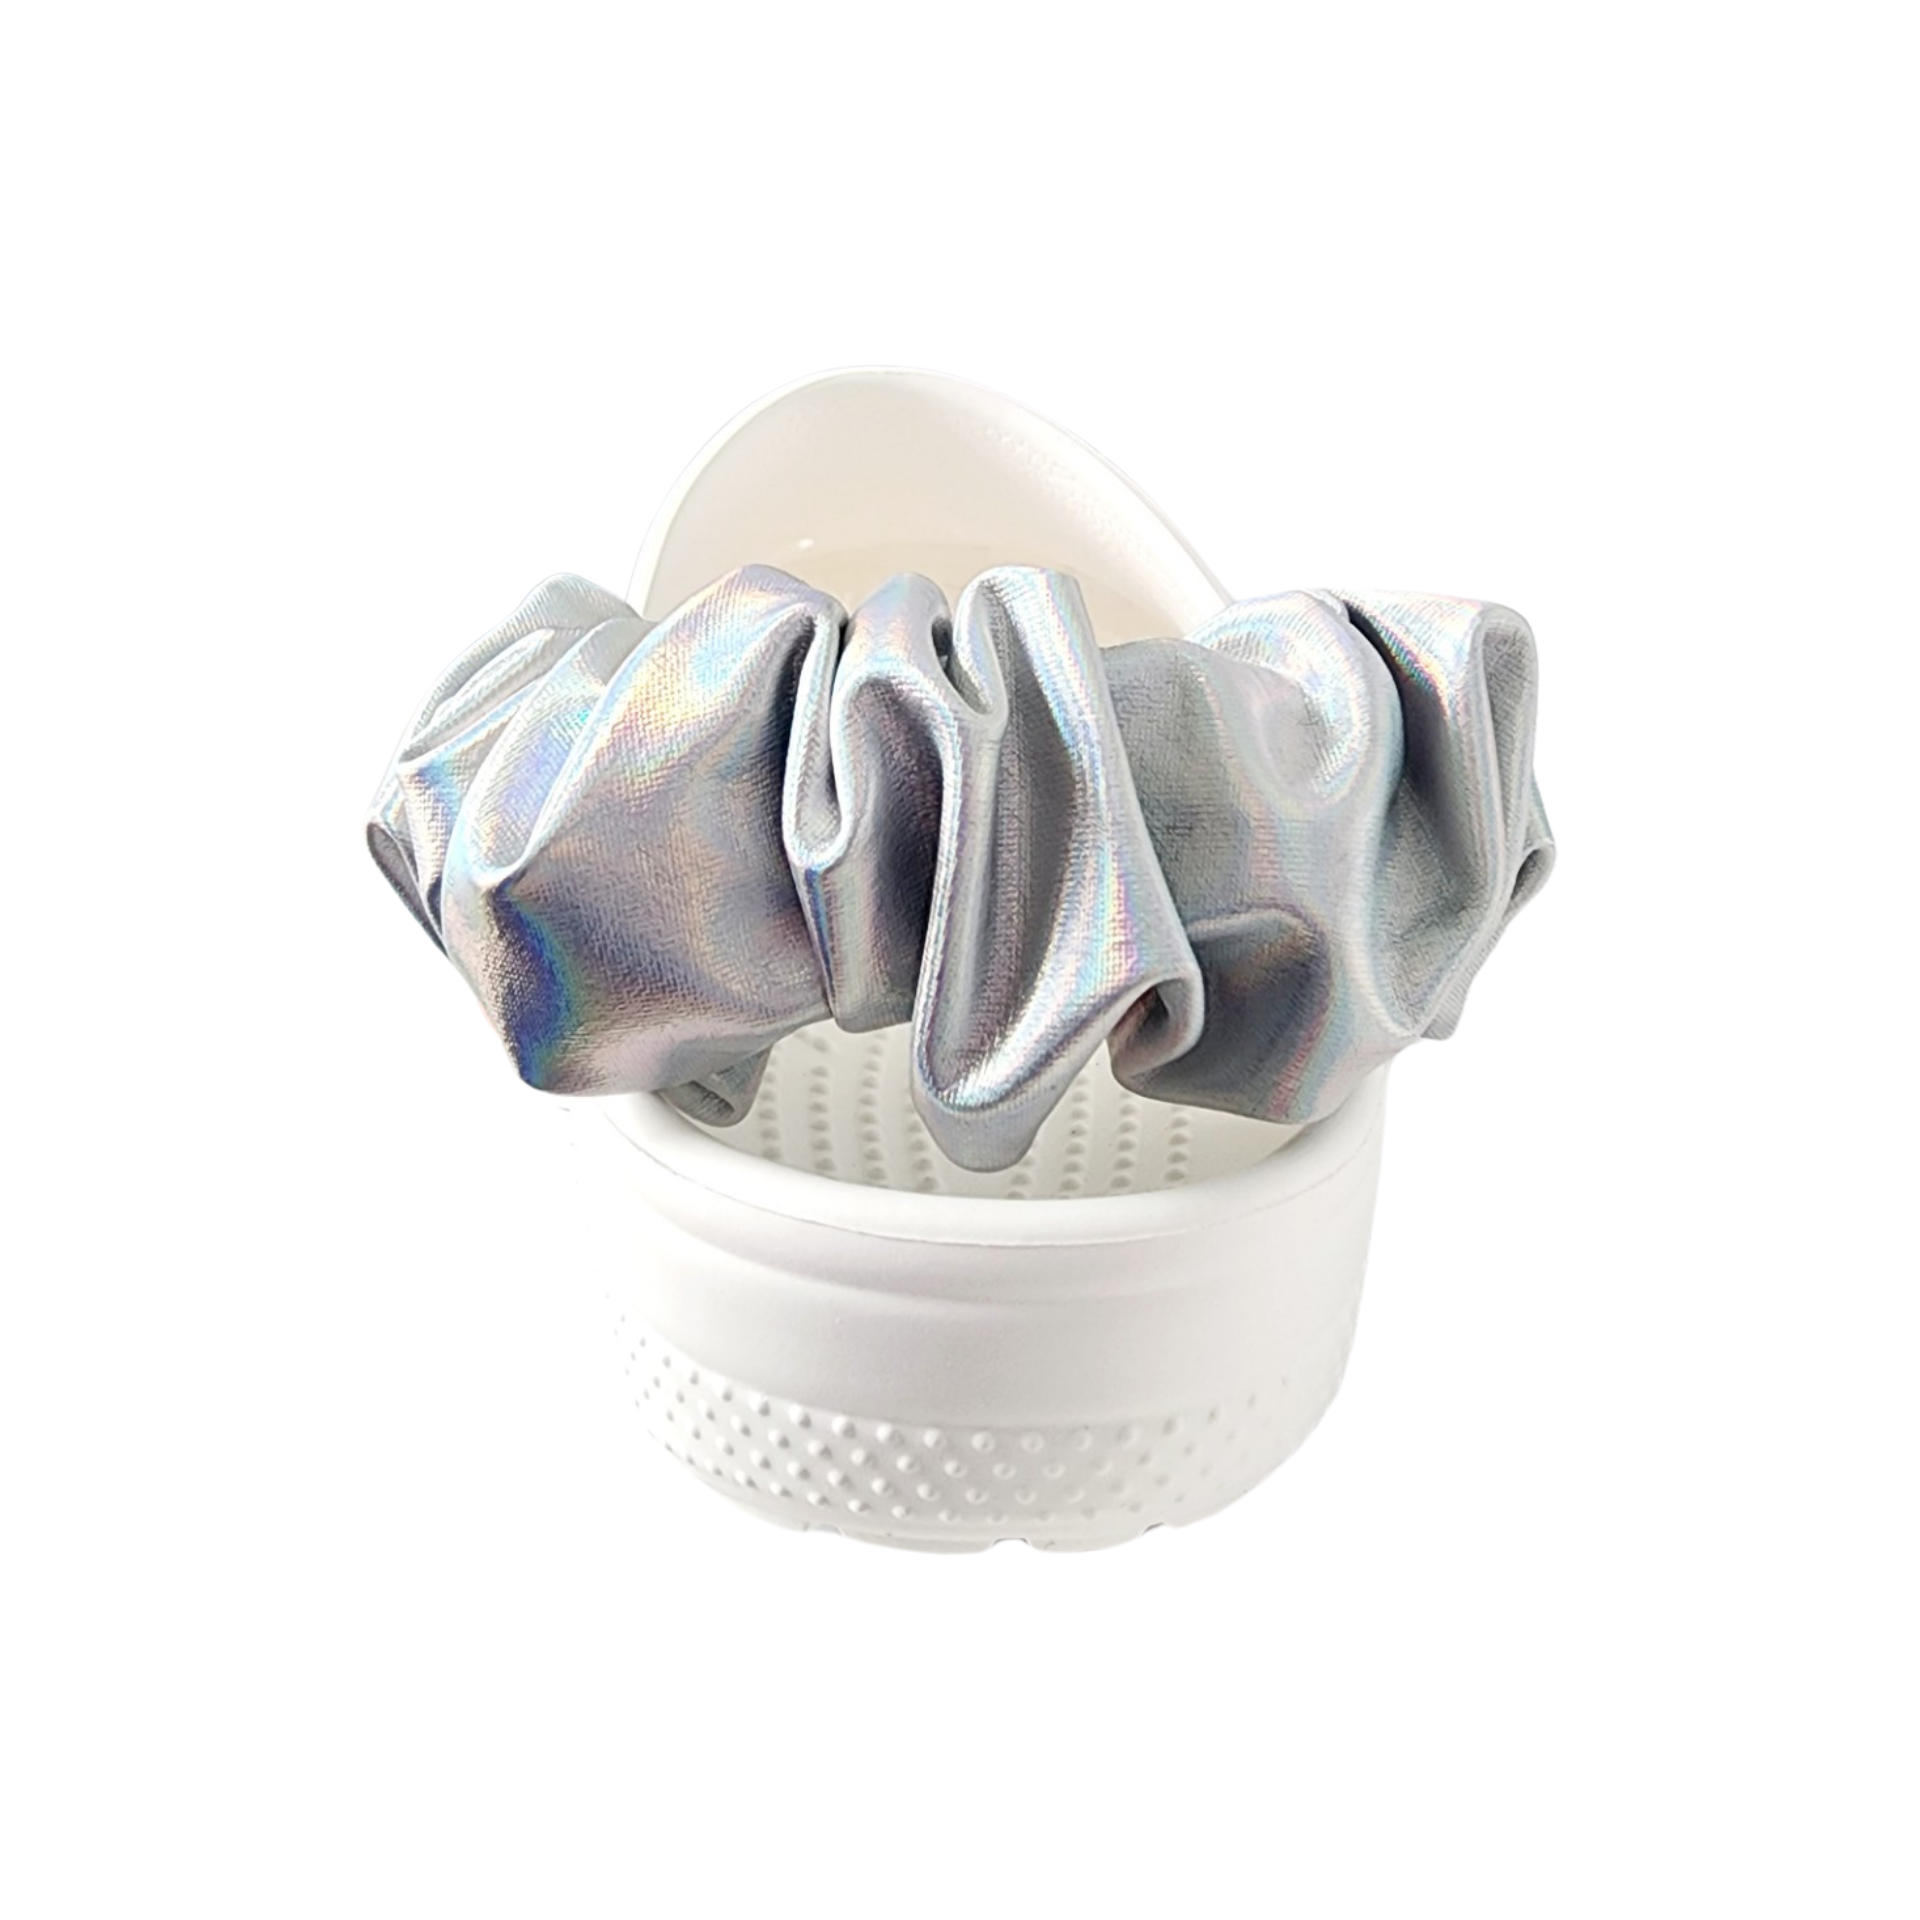 Strap Sizzle Shoe Scrunchies - Iridescent Silver